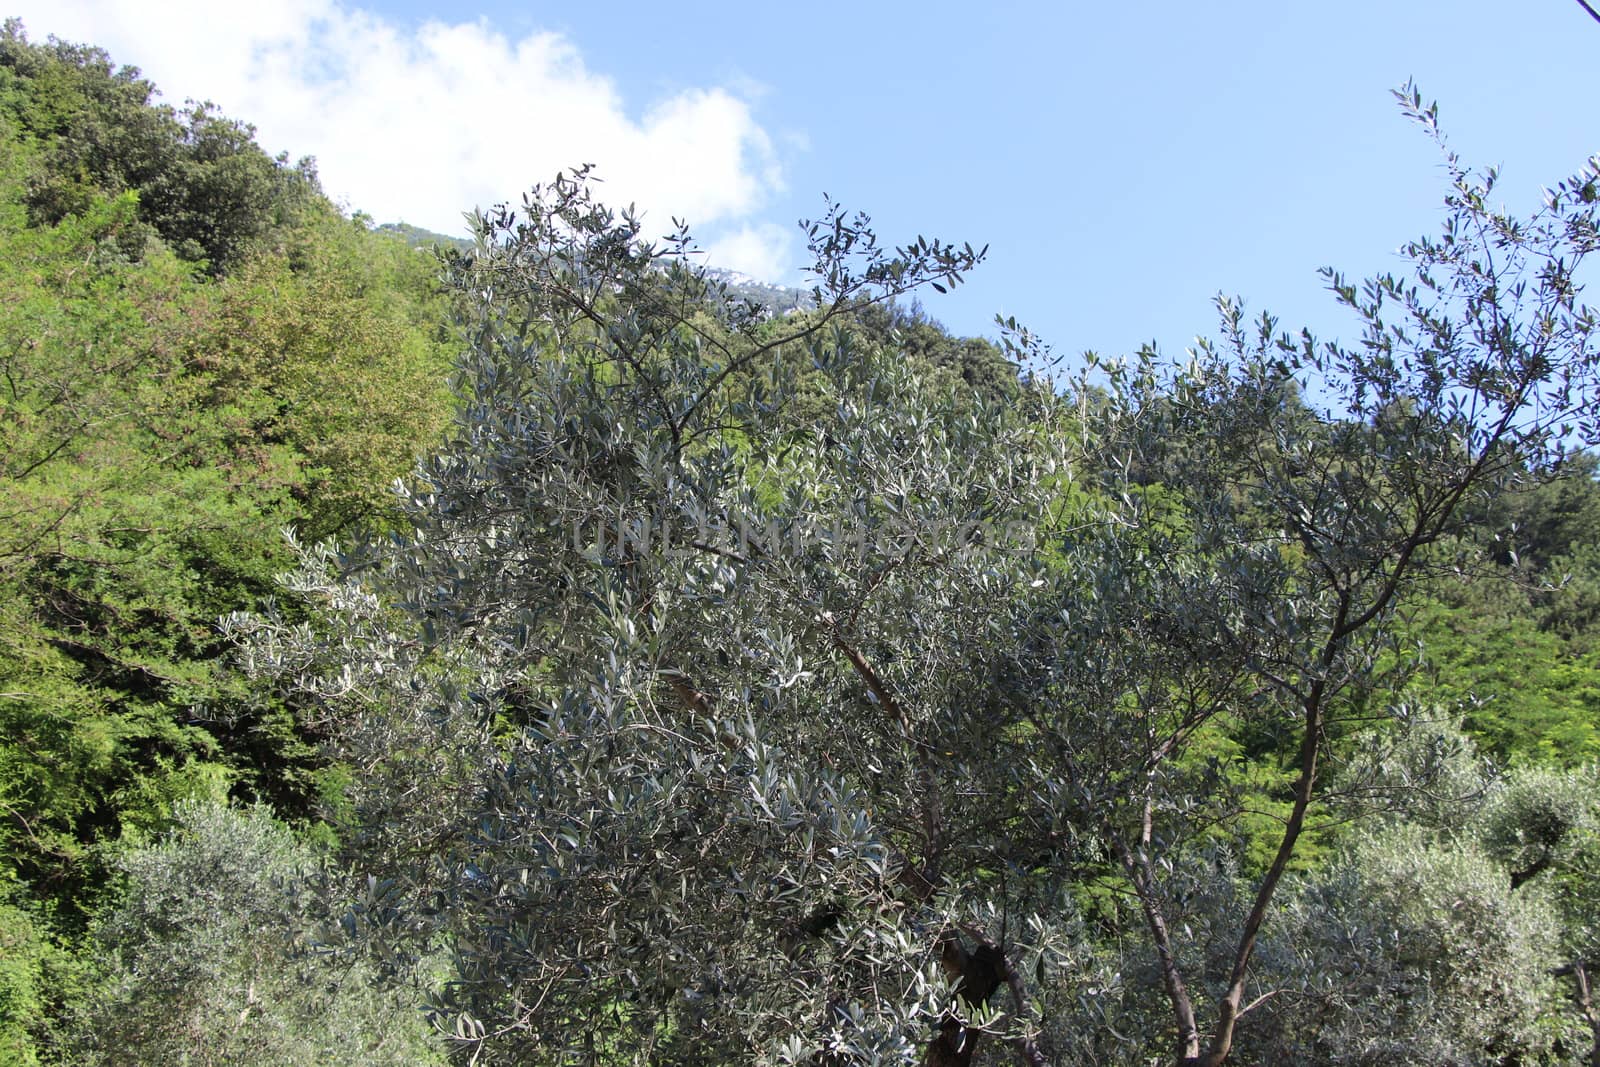 olive grove on Garda lake in northern Italy